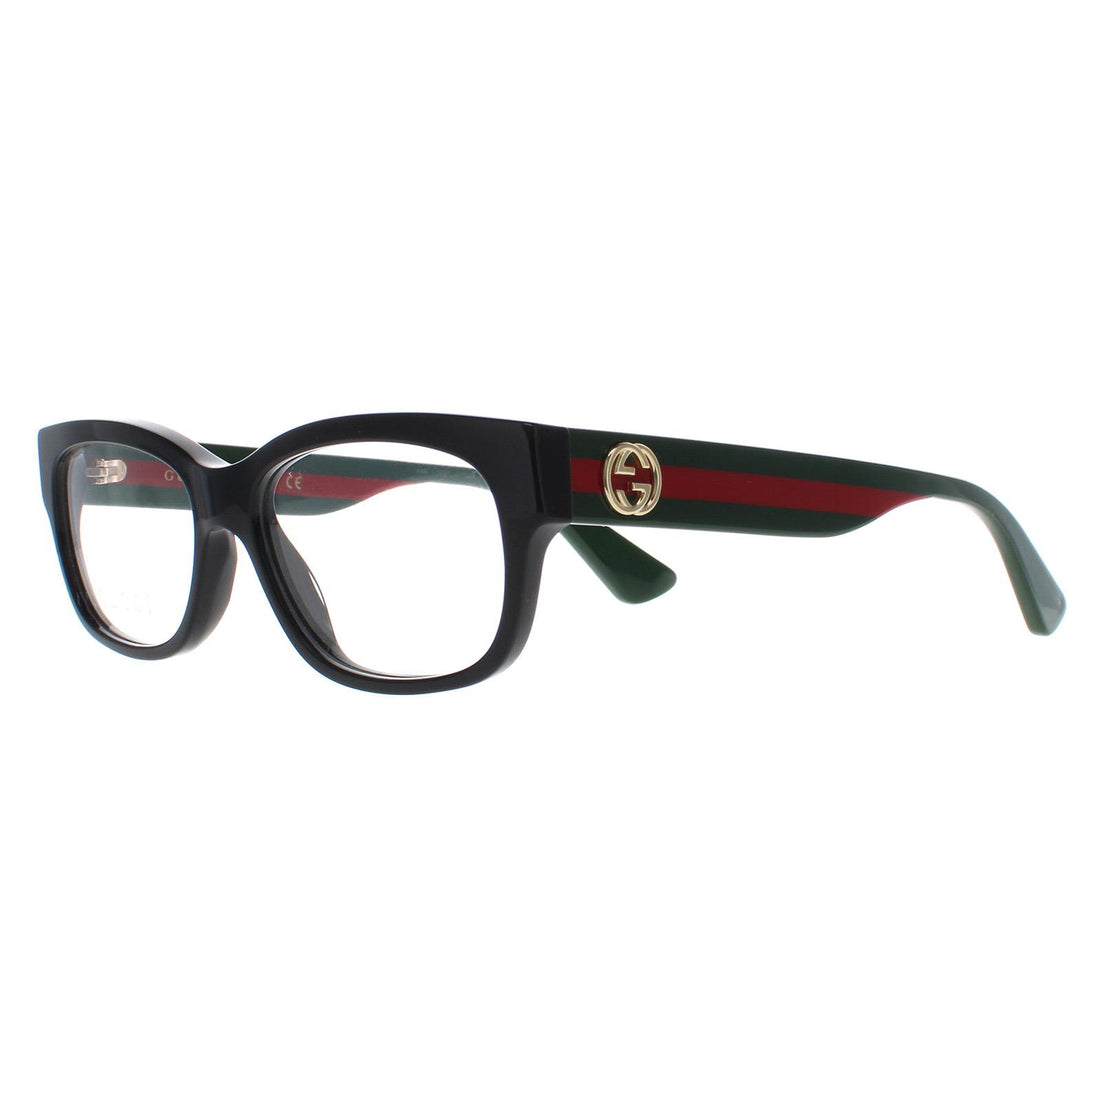 Gucci Glasses Frames GG0278O 014 Black Red & Green Women